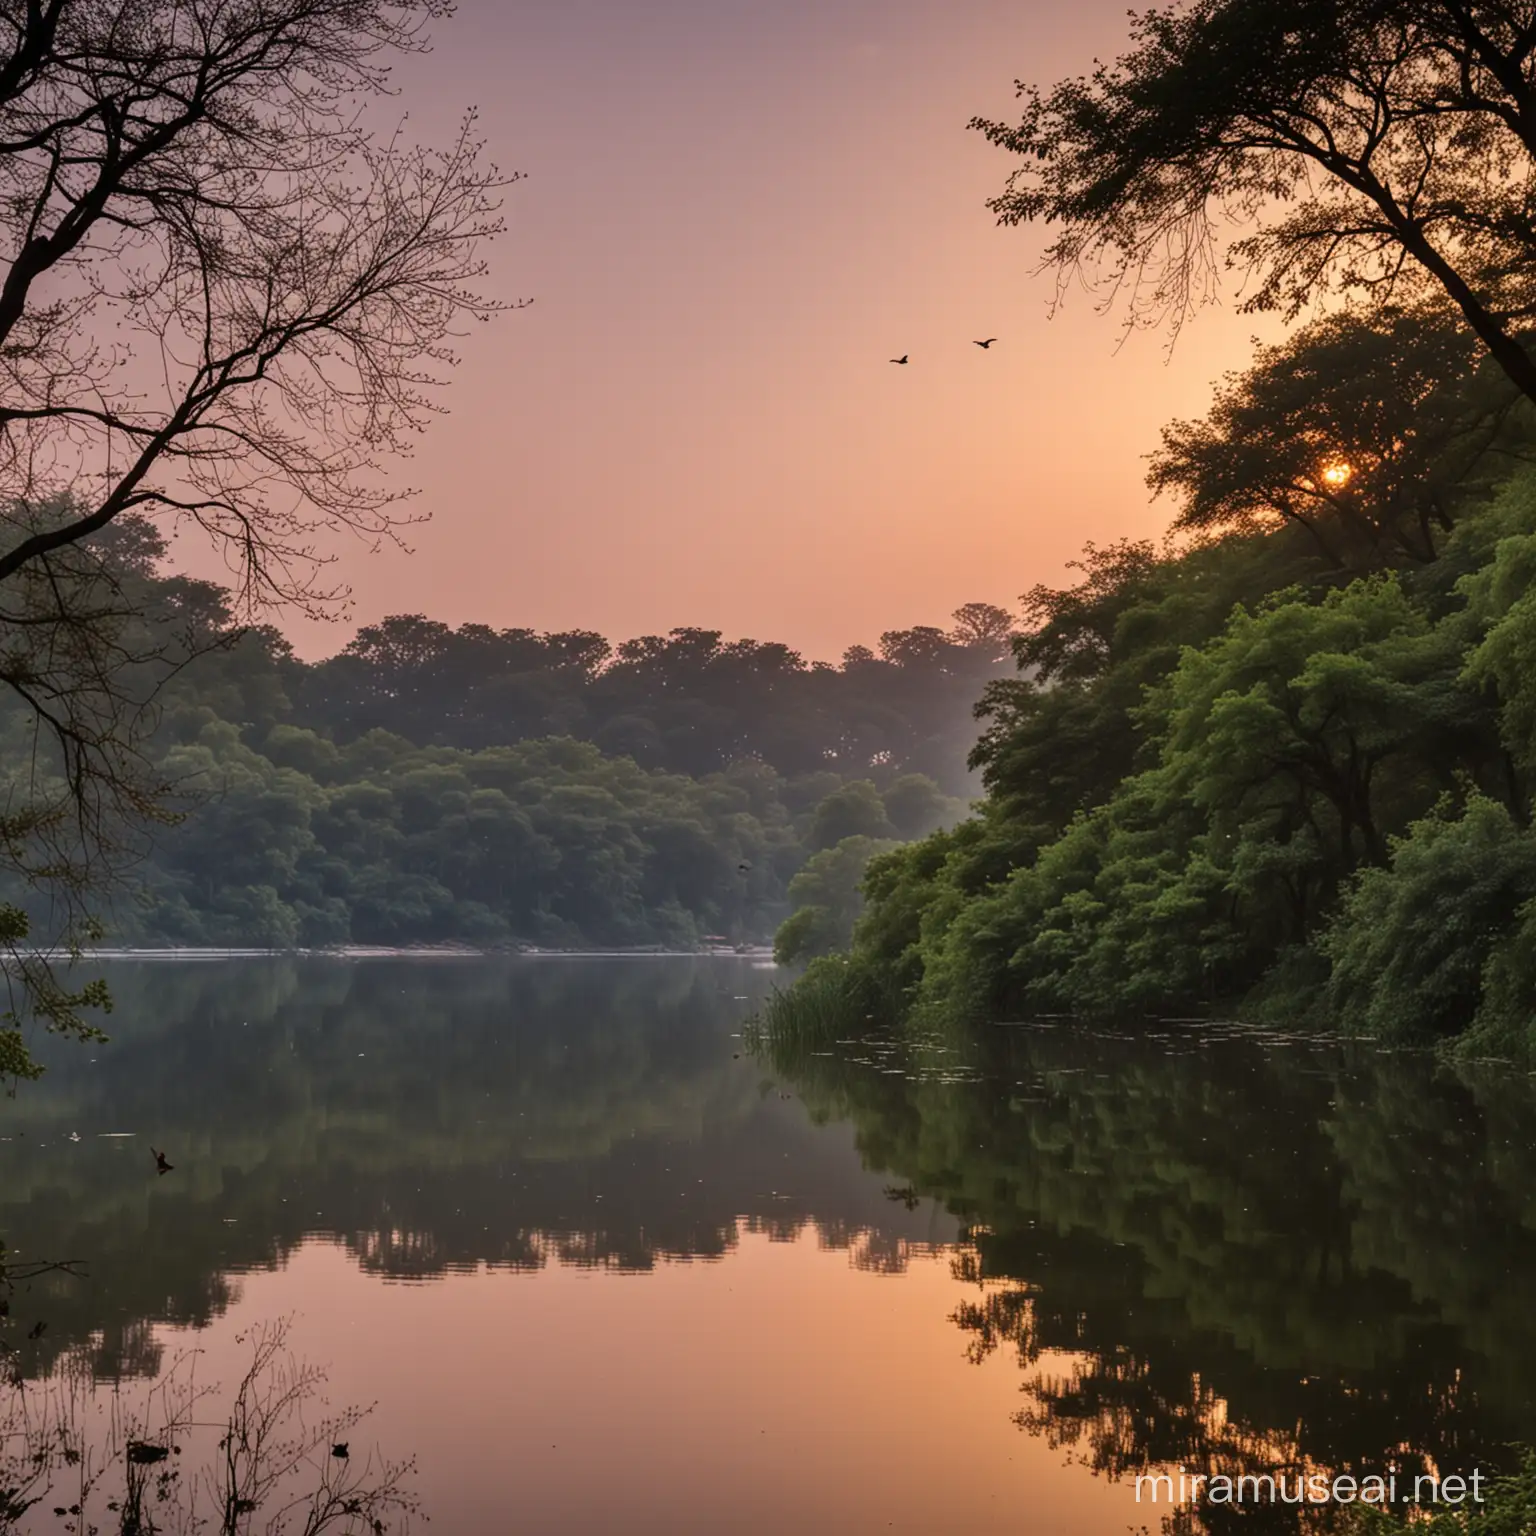 Tranquil Evening at Hauz Khas Fort Serene Lake and Wildlife Amidst Delhis History